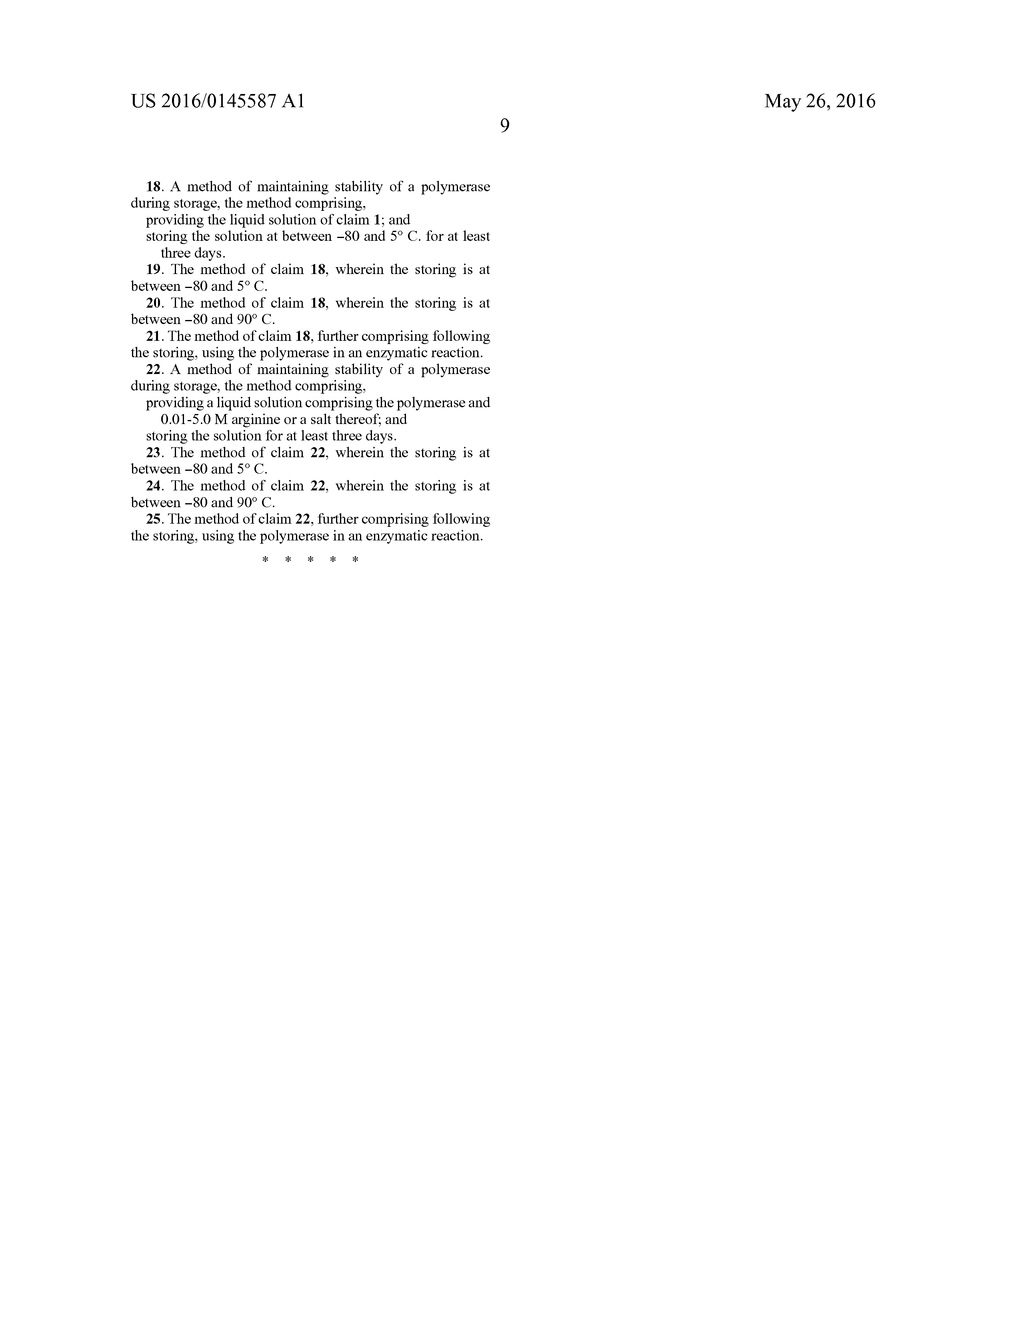 ARGININE IMPROVES POLYMERASE STORAGE STABILITY - diagram, schematic, and image 16